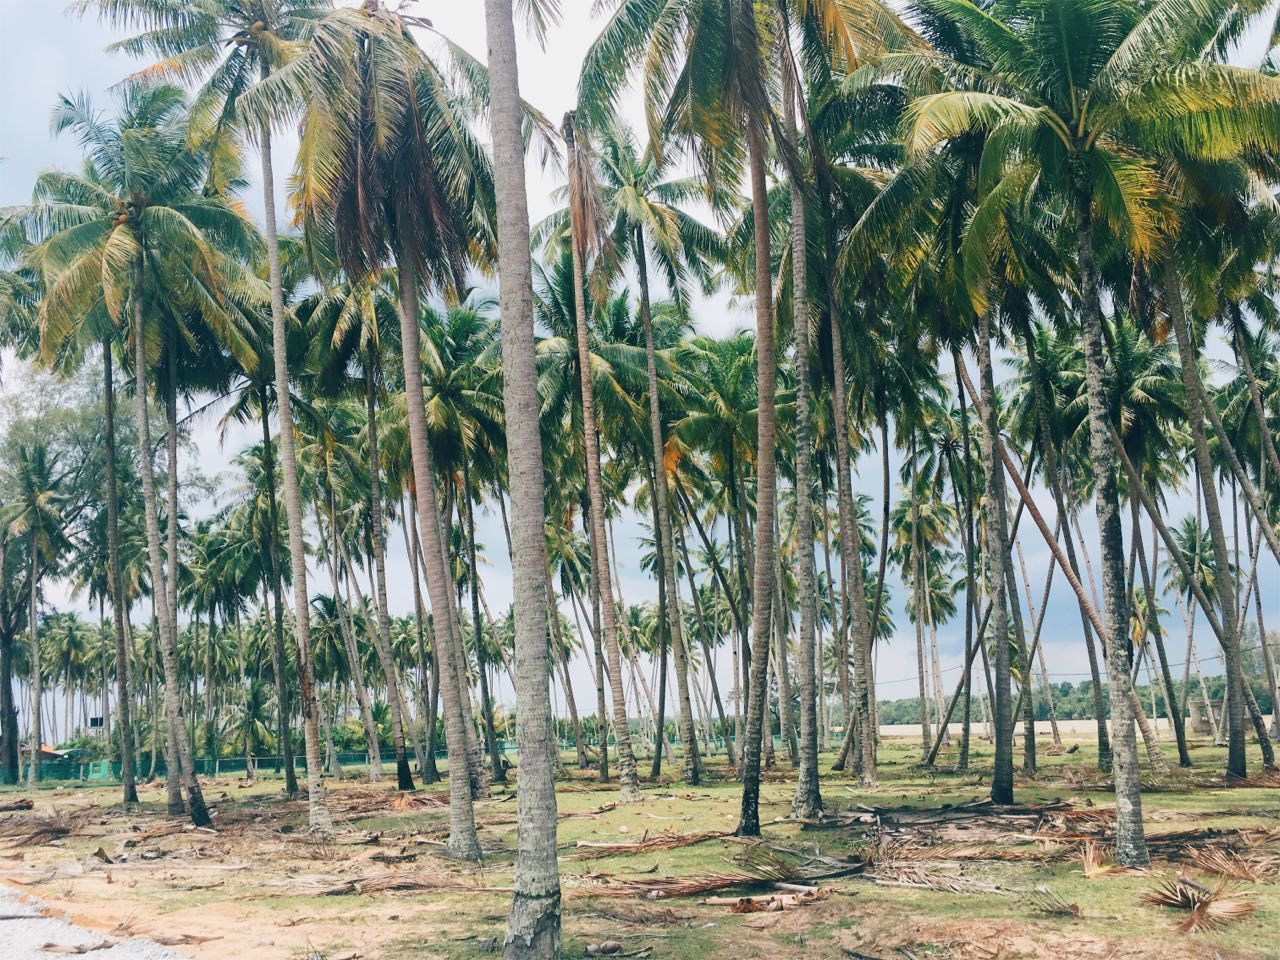 PALM TREES AT BEACH